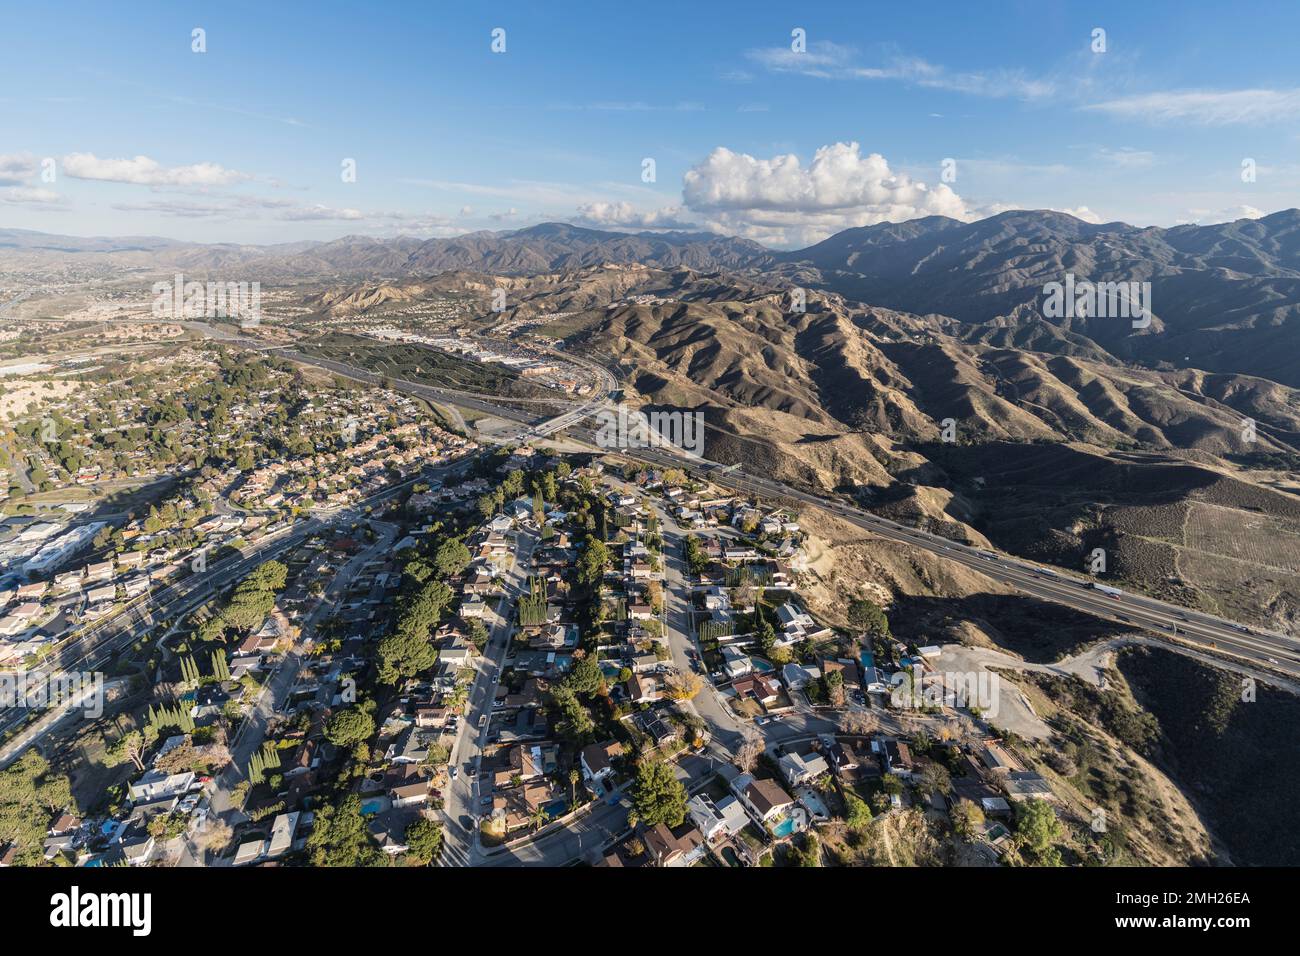 Aerial cityscape view of suburban sprawl in the Santa Clarita community of Los Angeles County, California. Stock Photo